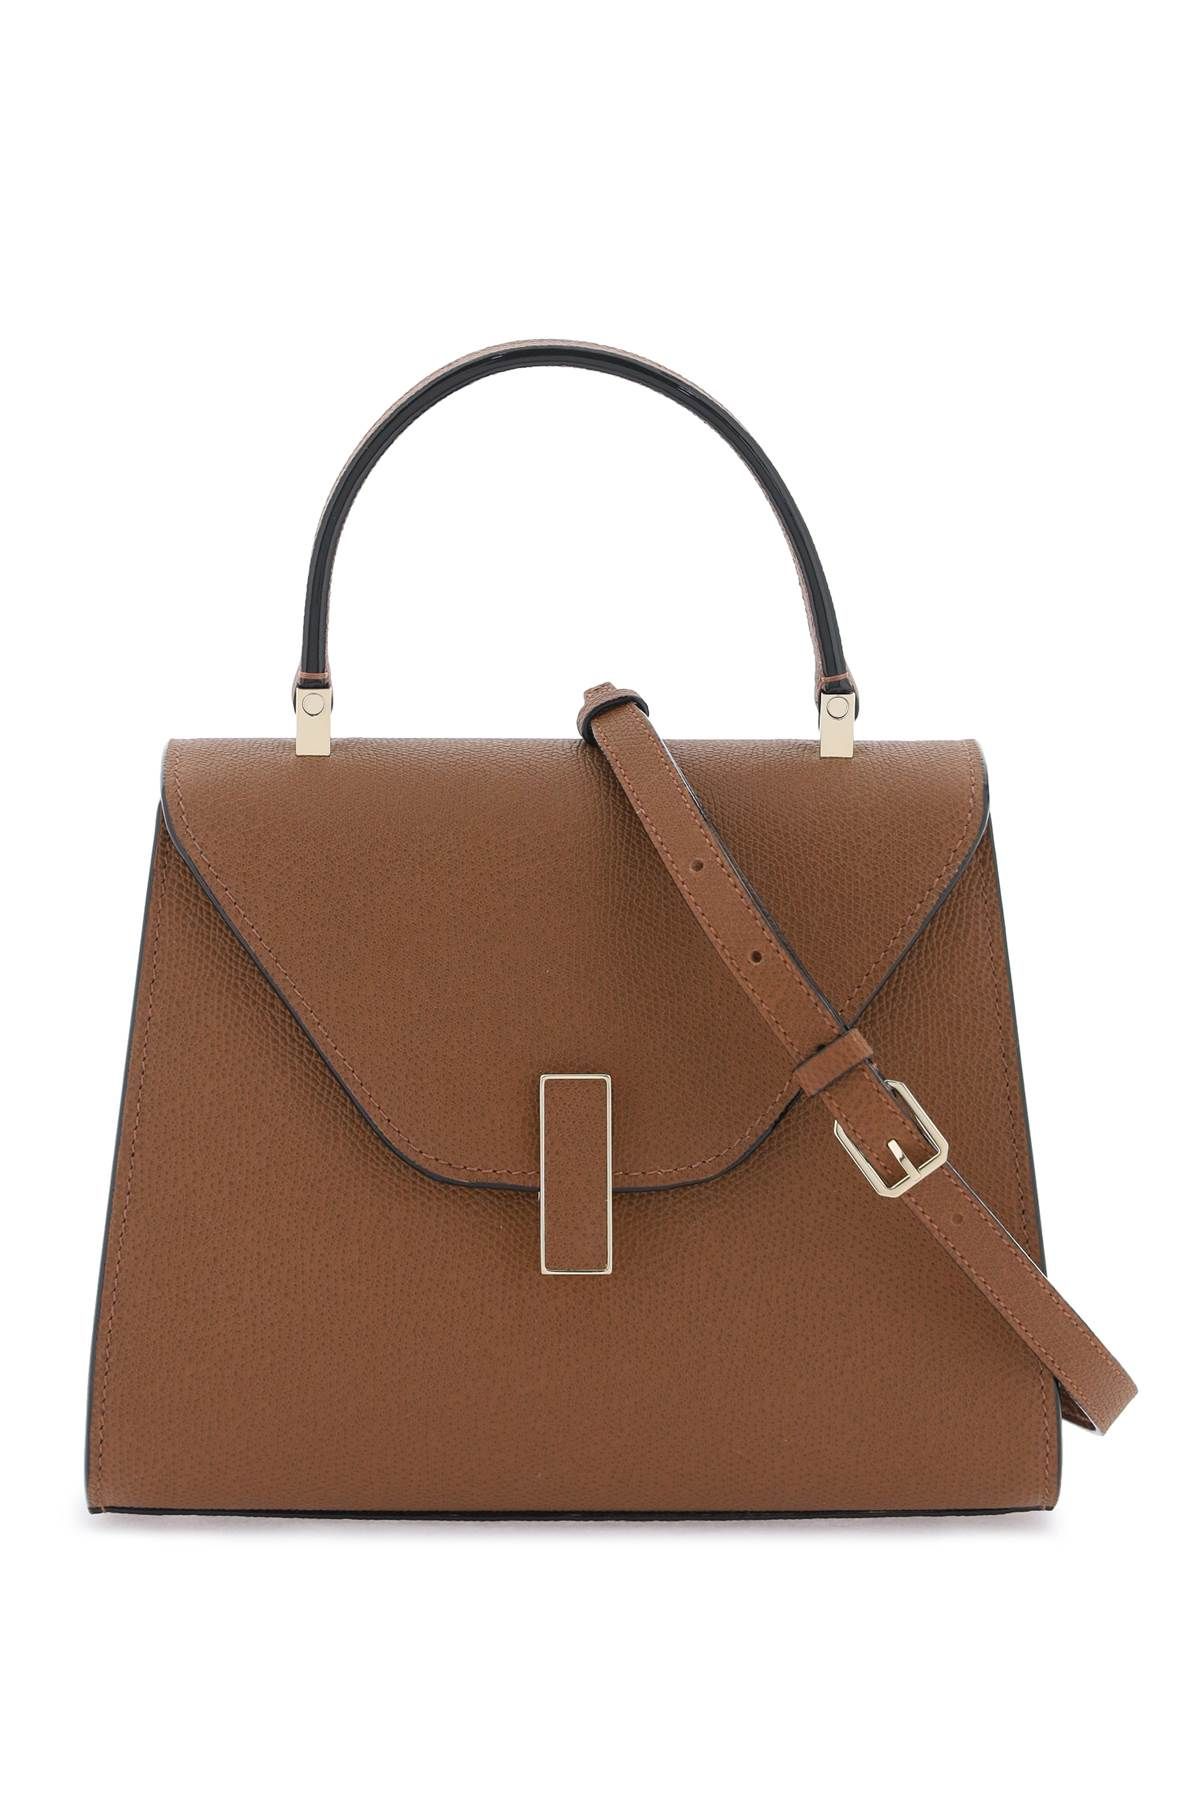 Valextra Iside Mini Handbag In Brown